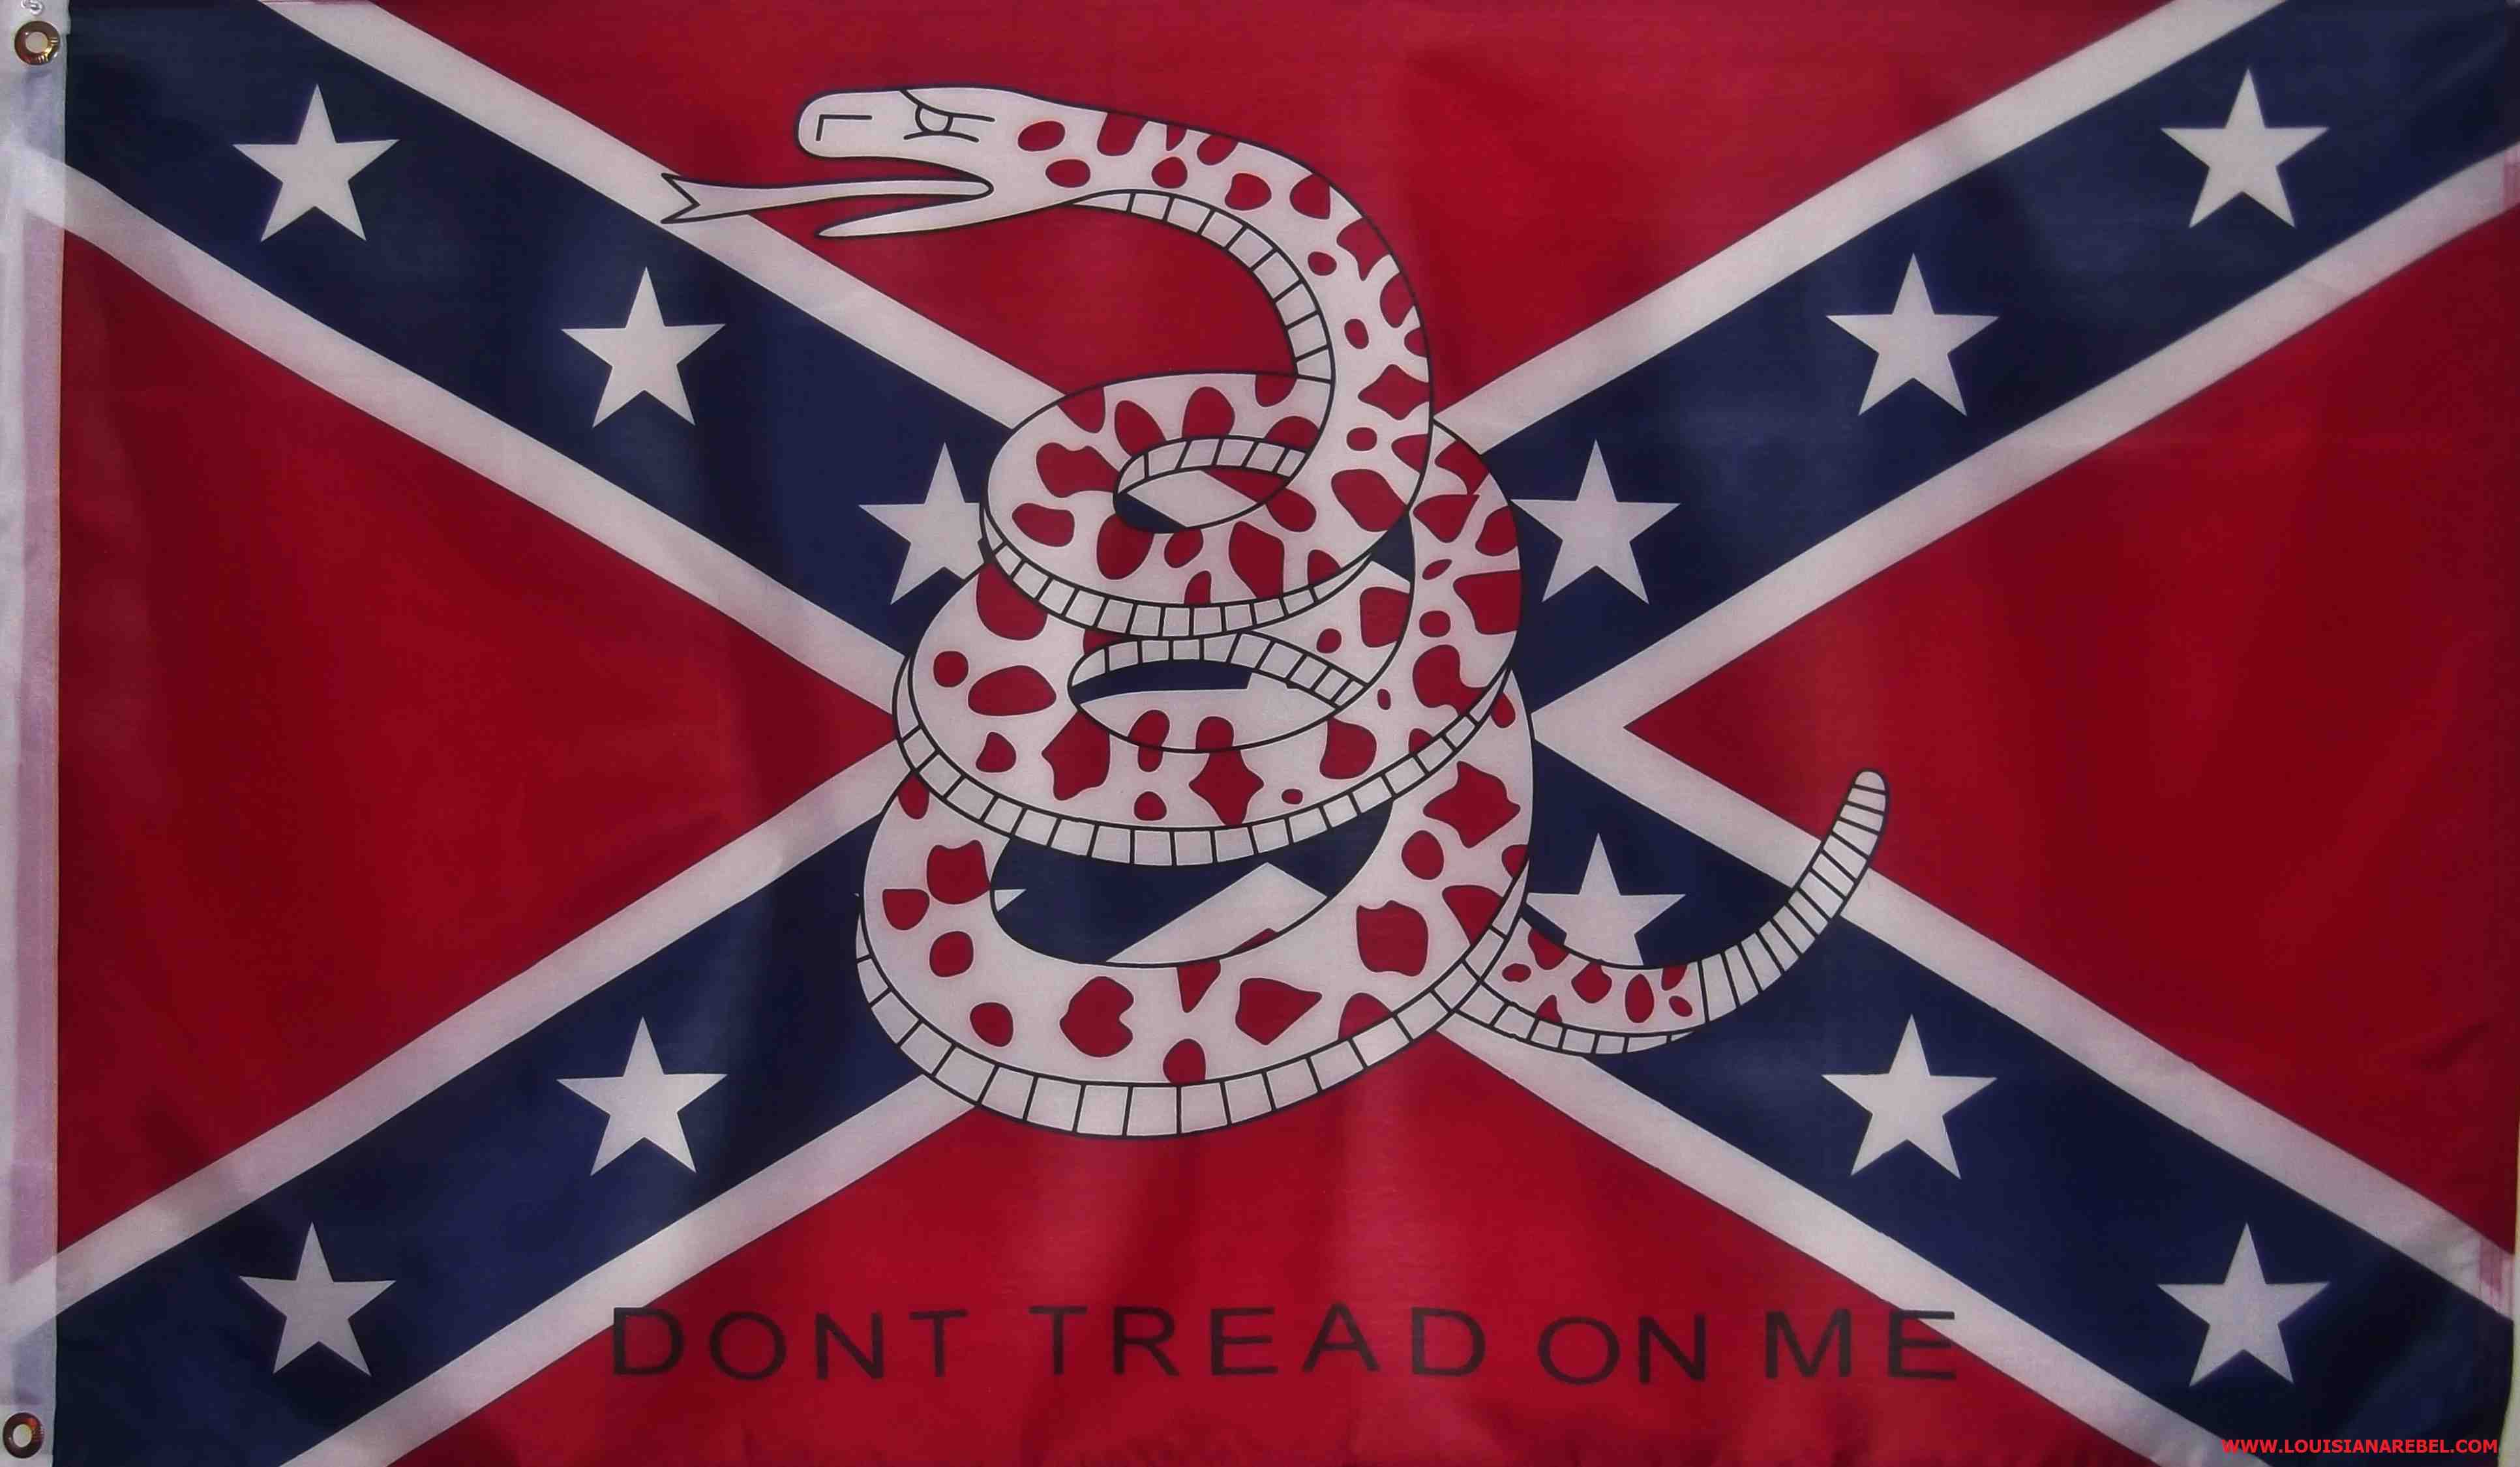 Dont tread on me rebel flag. 